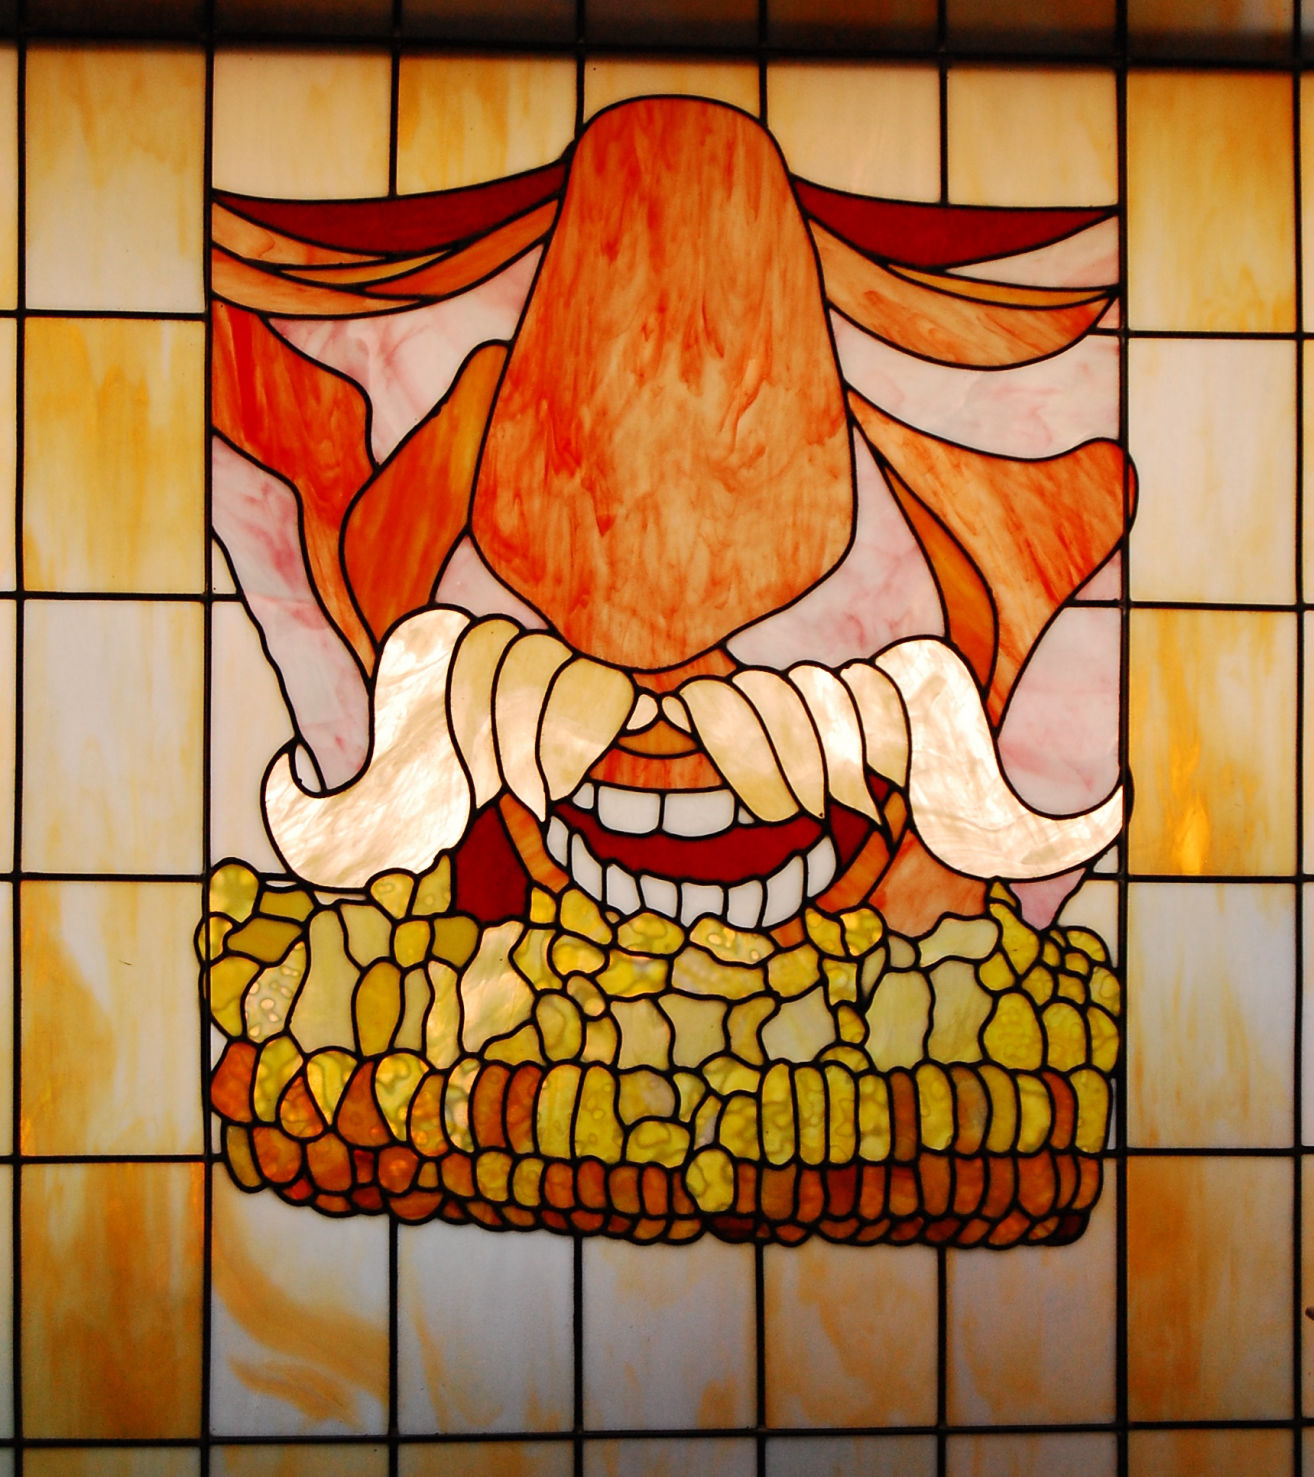 Ruminant: The "Mustachioed Corn-Chomper" panel.